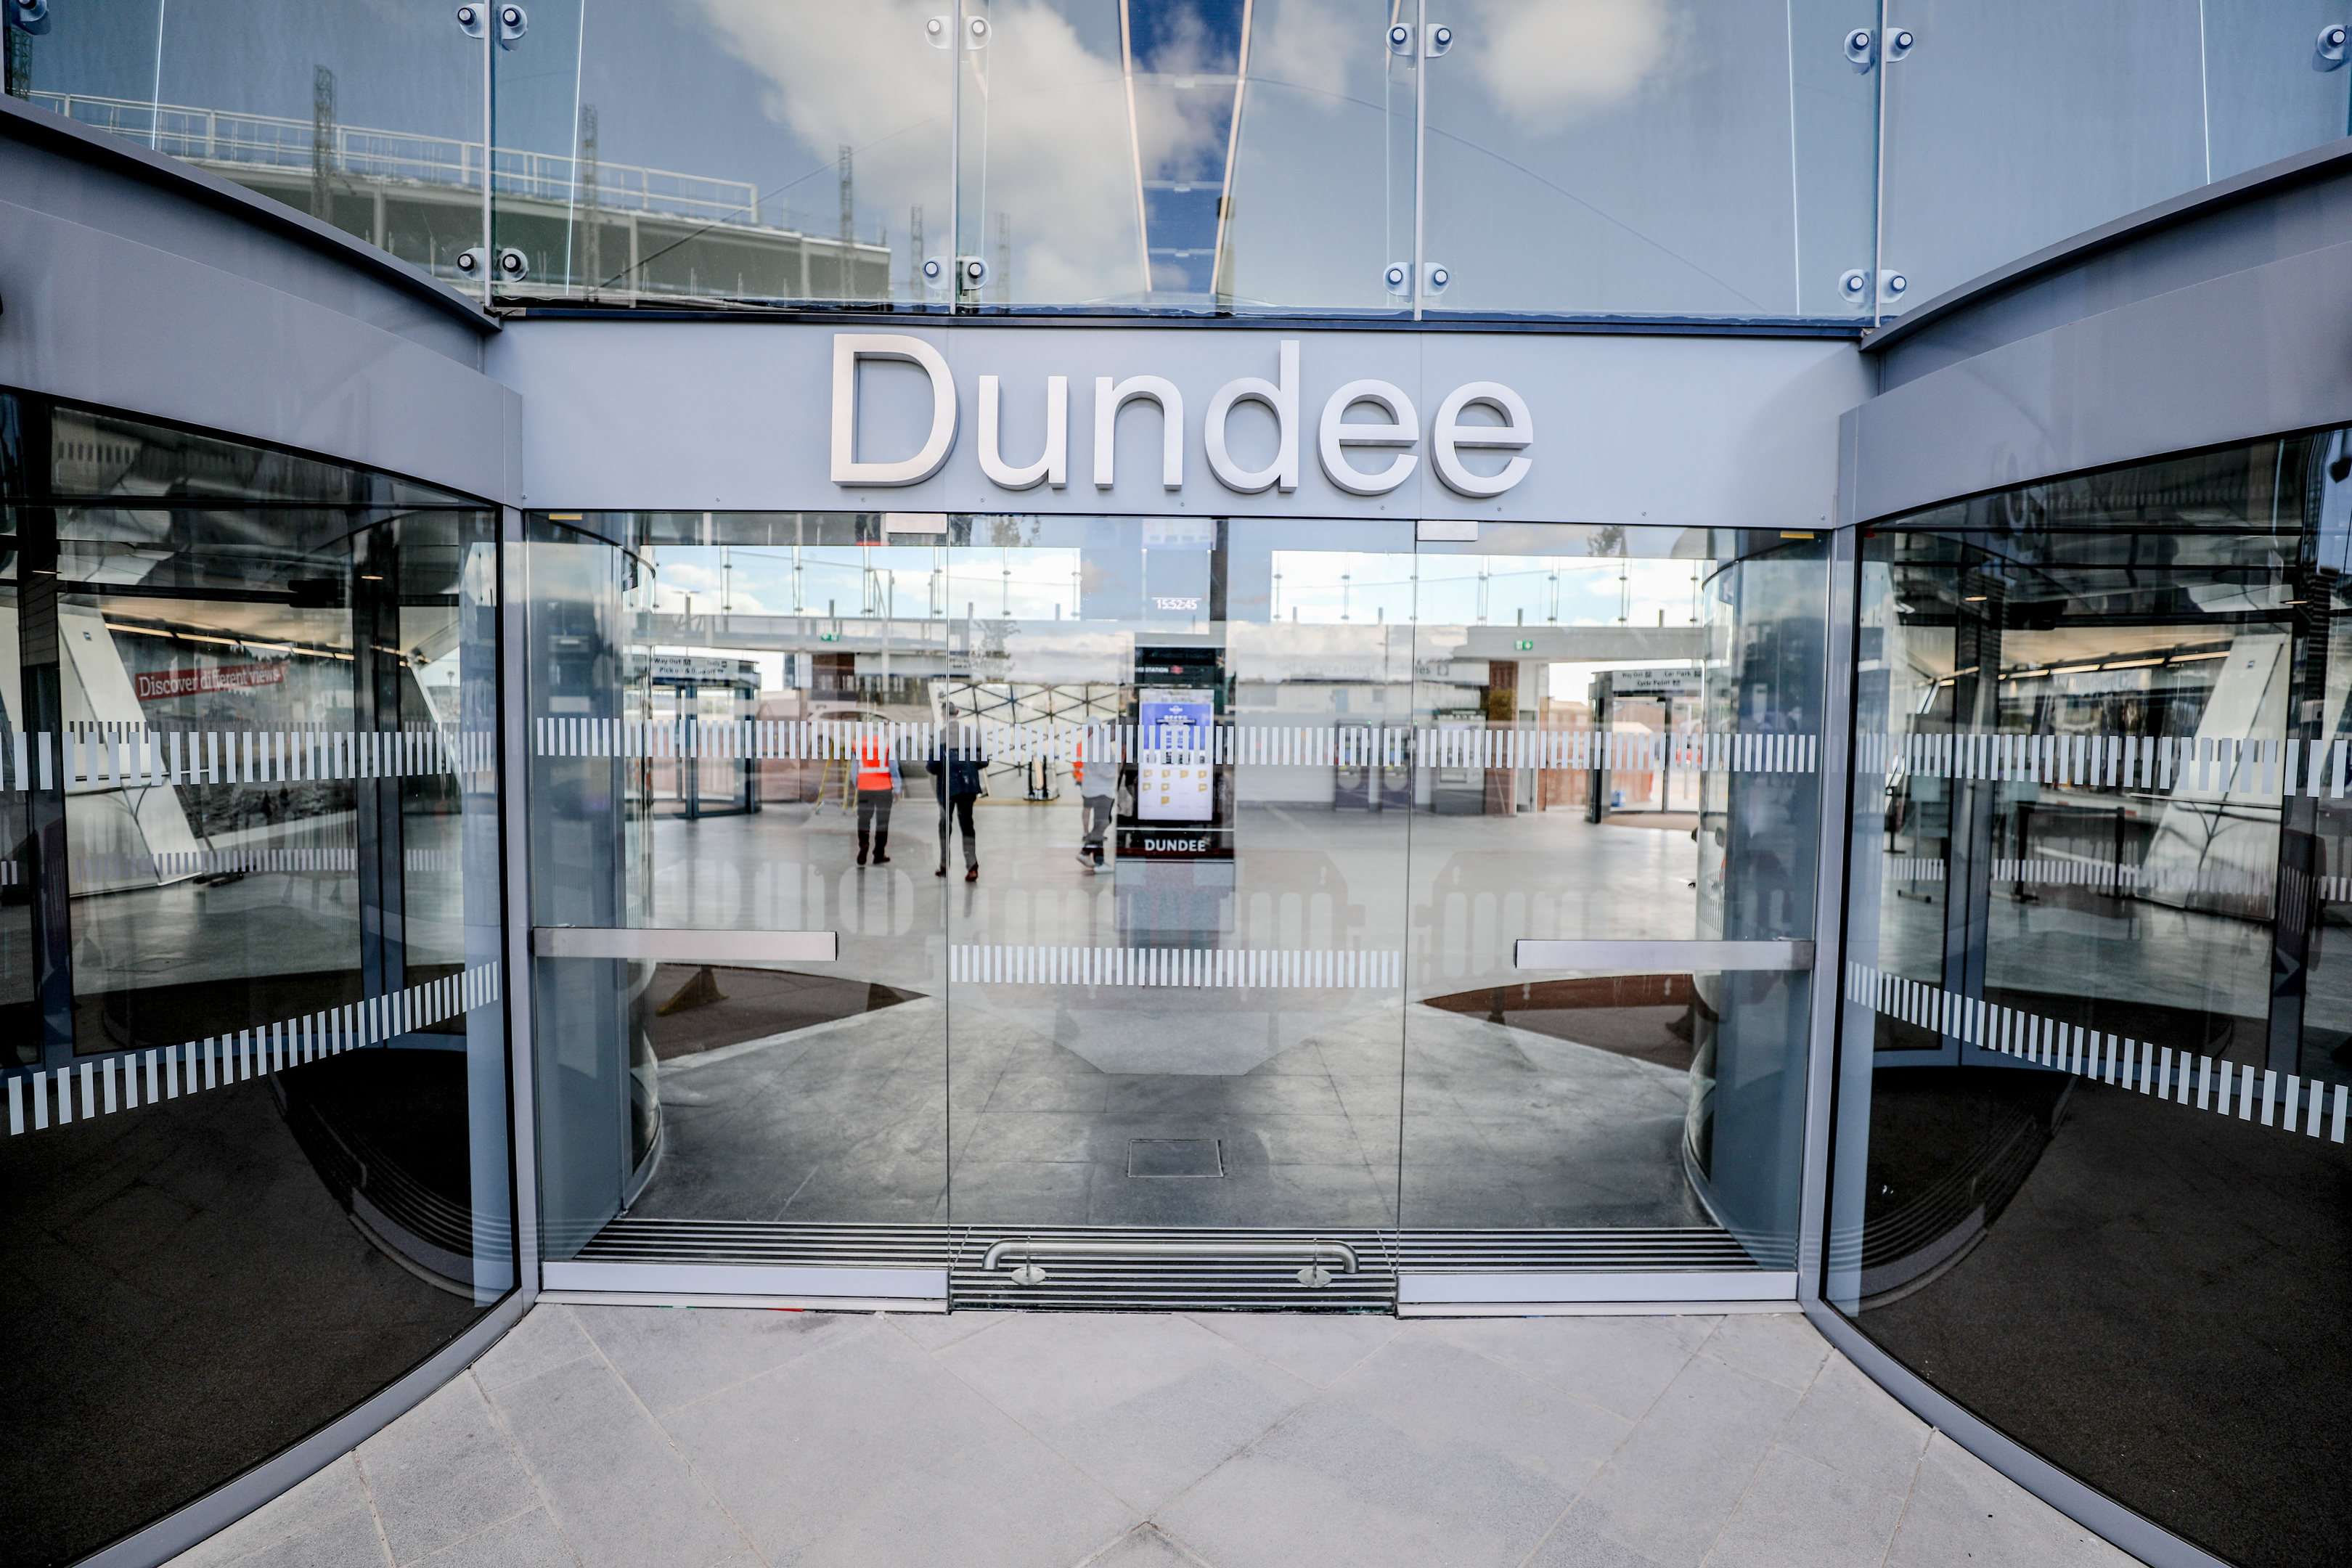 Dundee railway station.